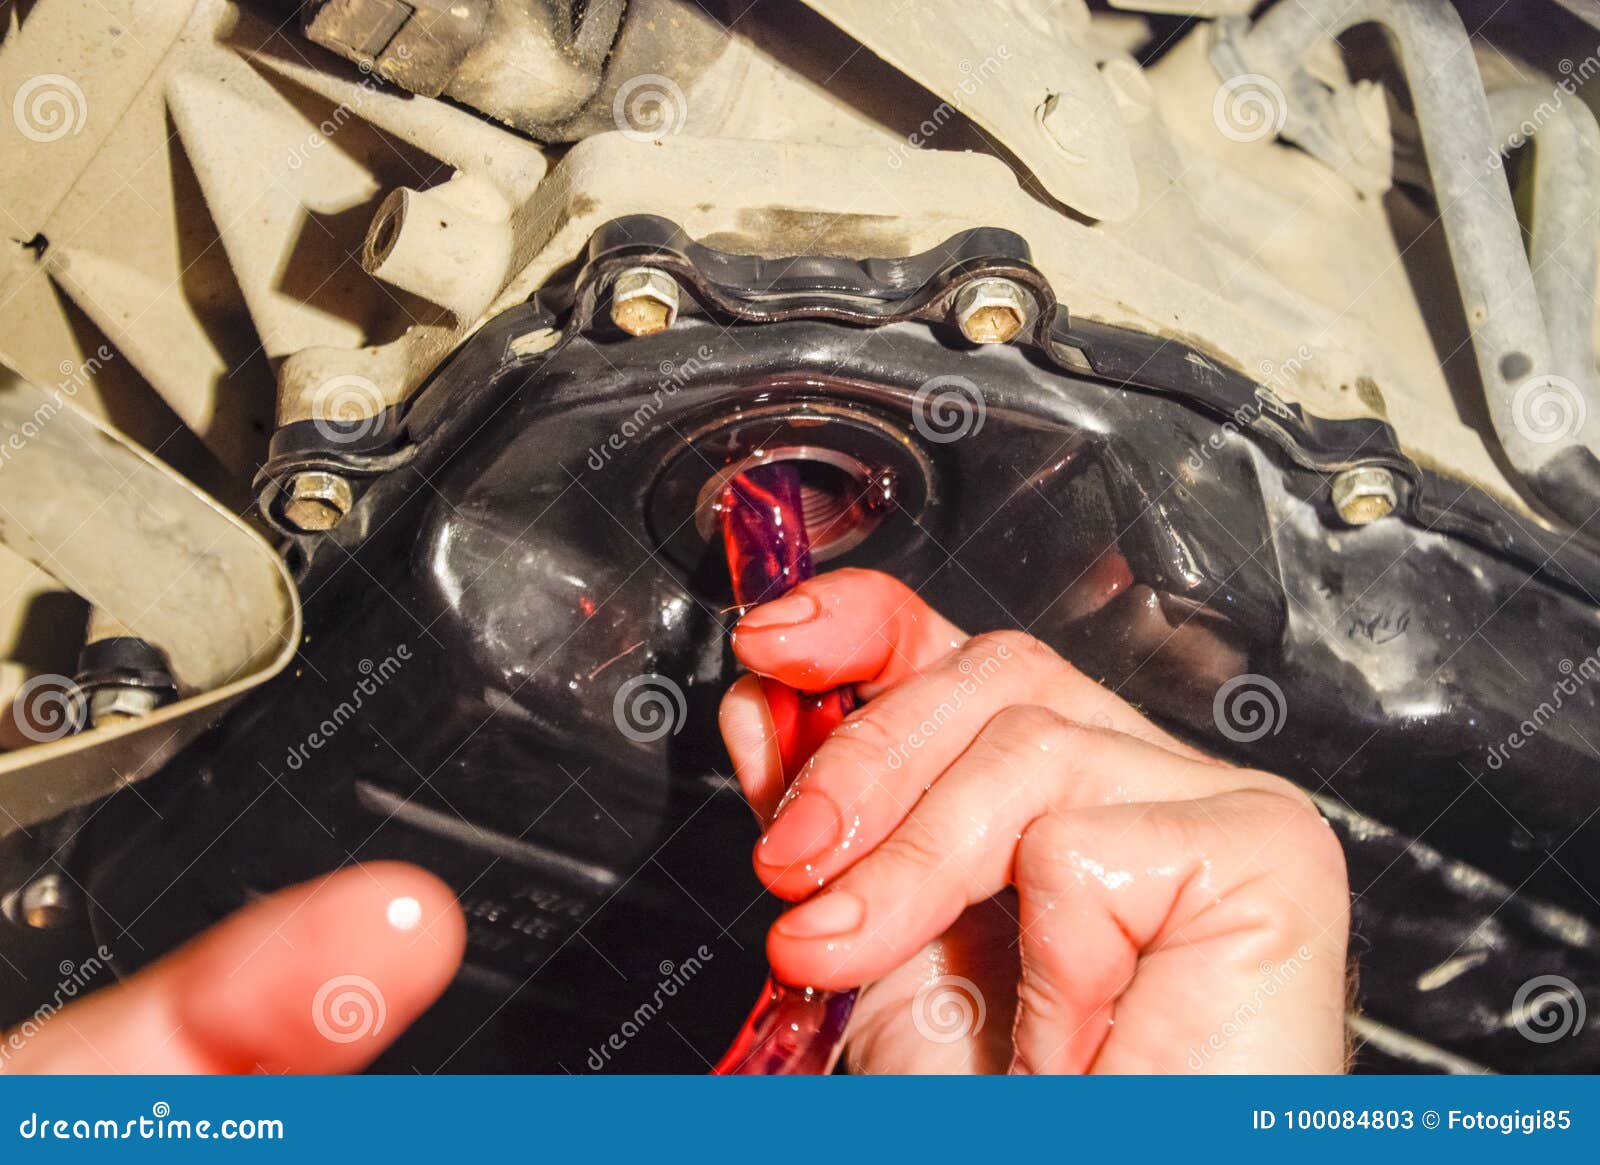 auto gear oil change